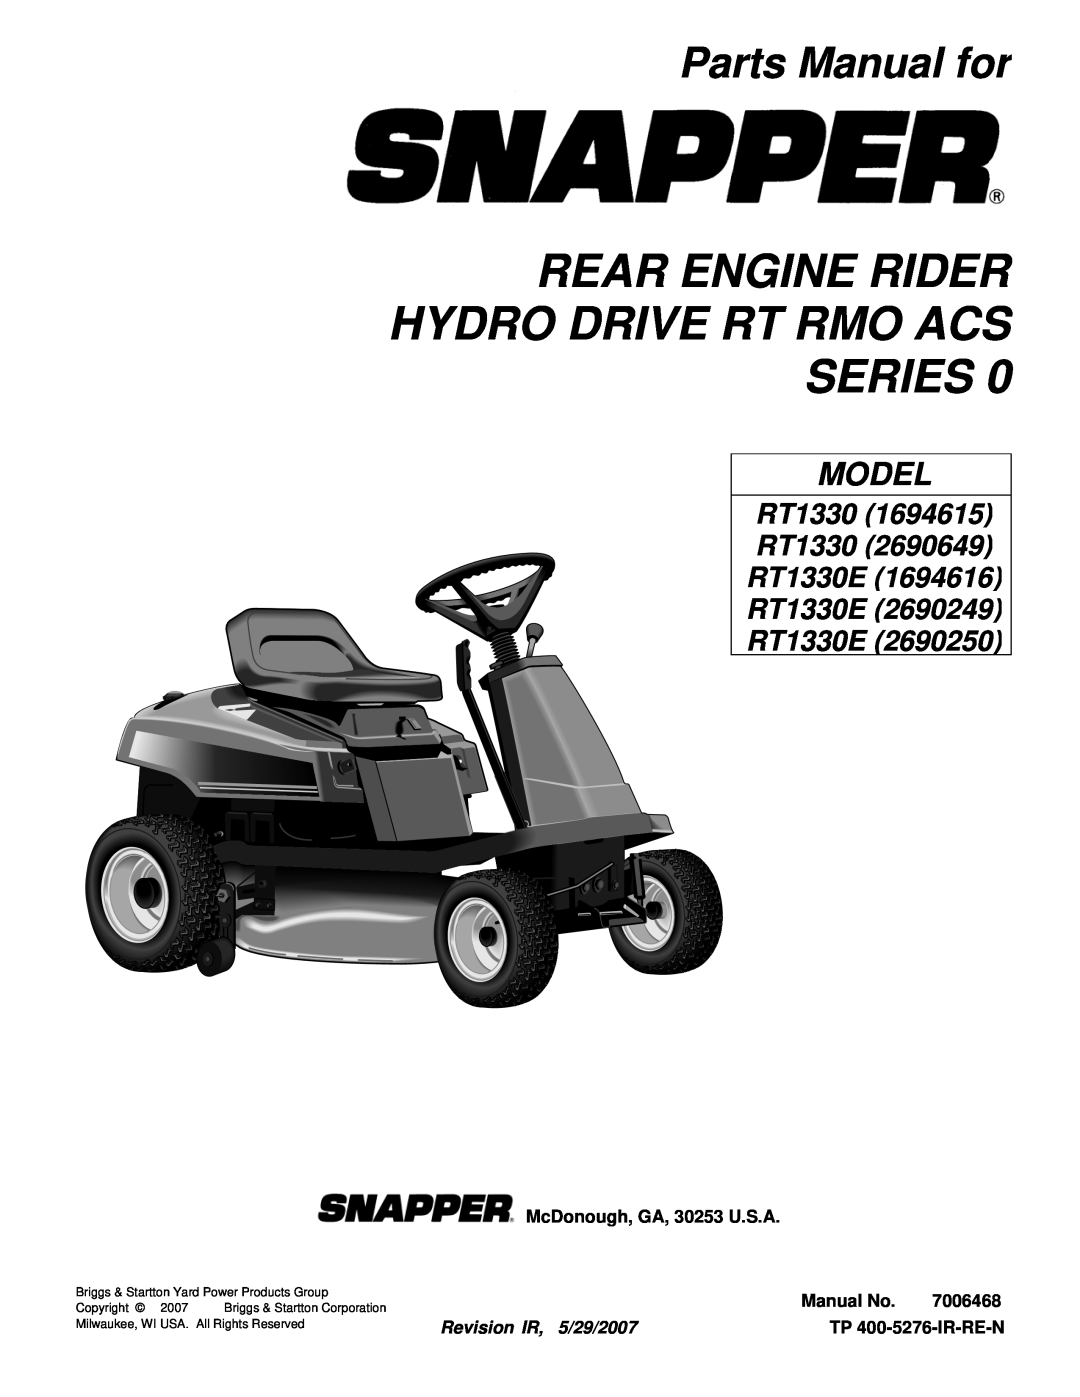 Snapper RT1330E (1694616), RT1330E (2690249) manual Rear Engine Rider Hydro Drive Rt Rmo Acs Series, Parts Manual for 